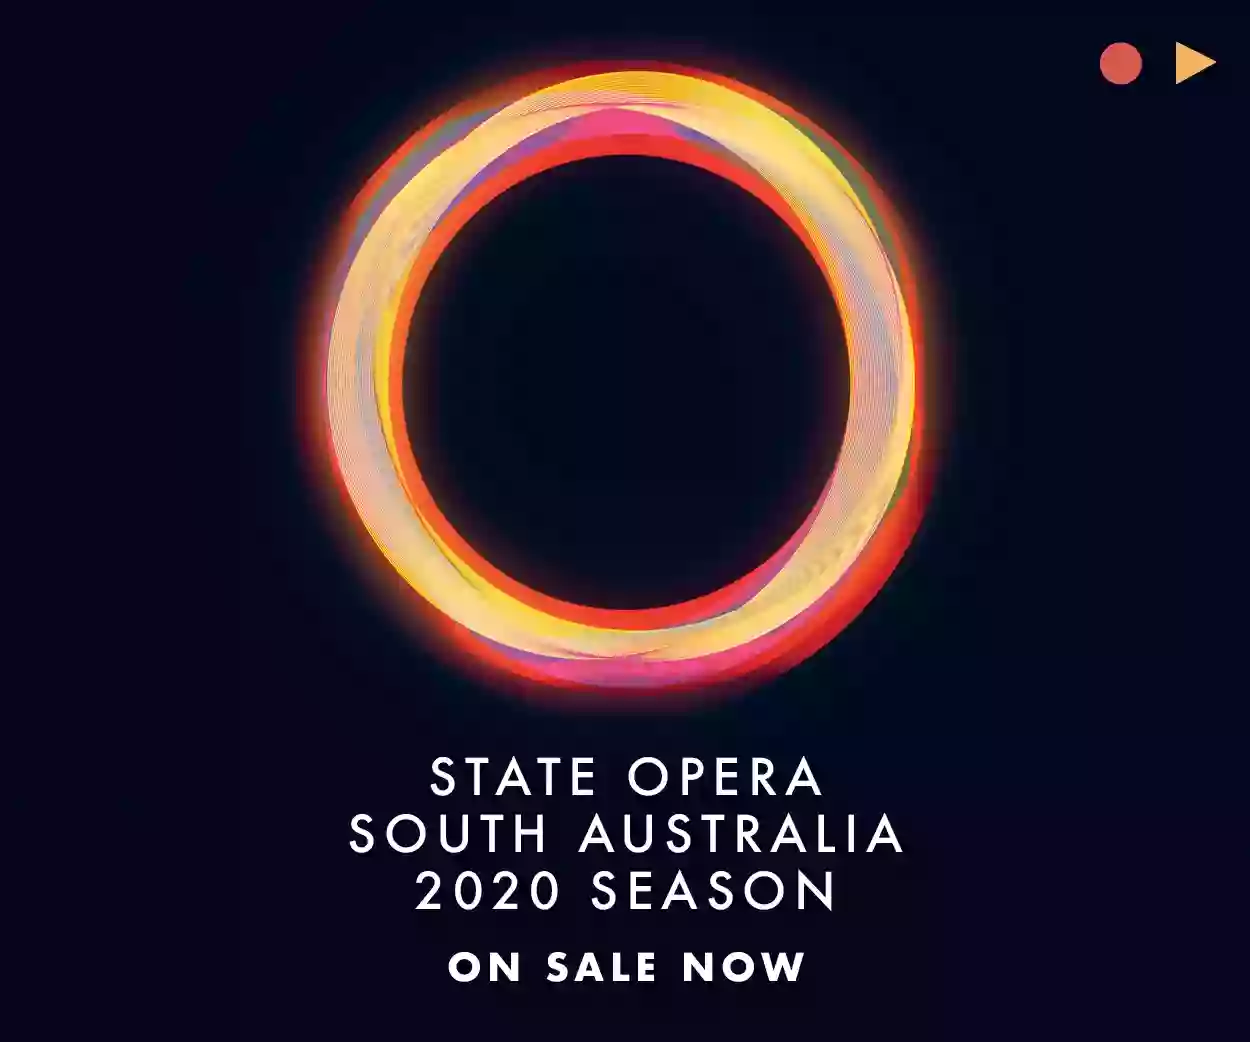 State Opera South Australia